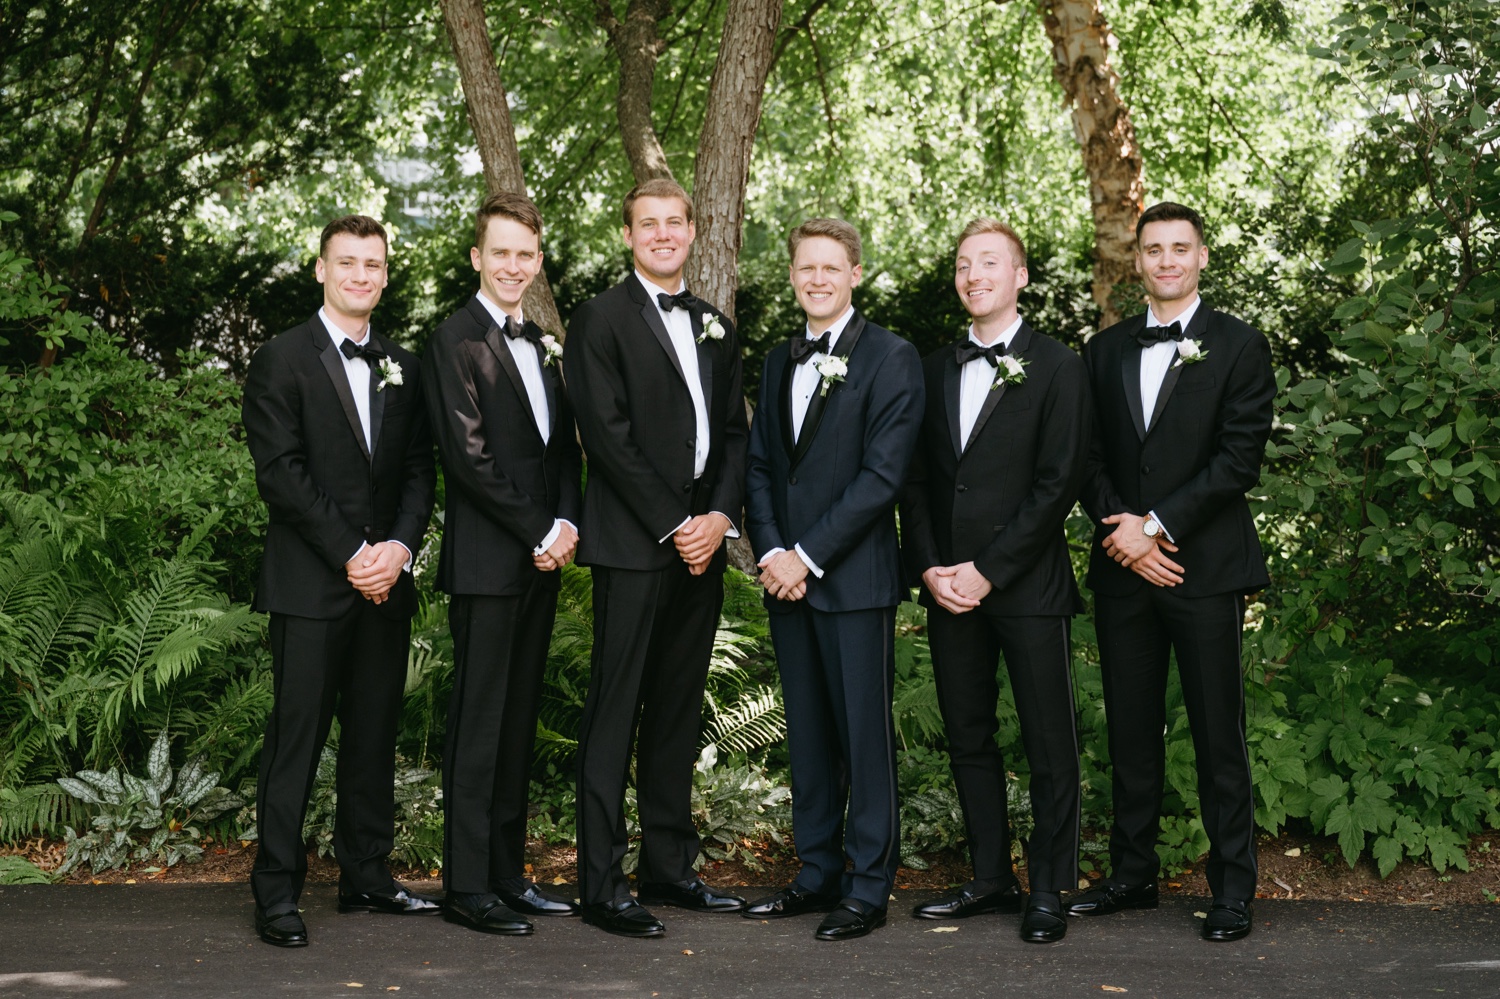 woodstock inn wedding groomsmen smiling